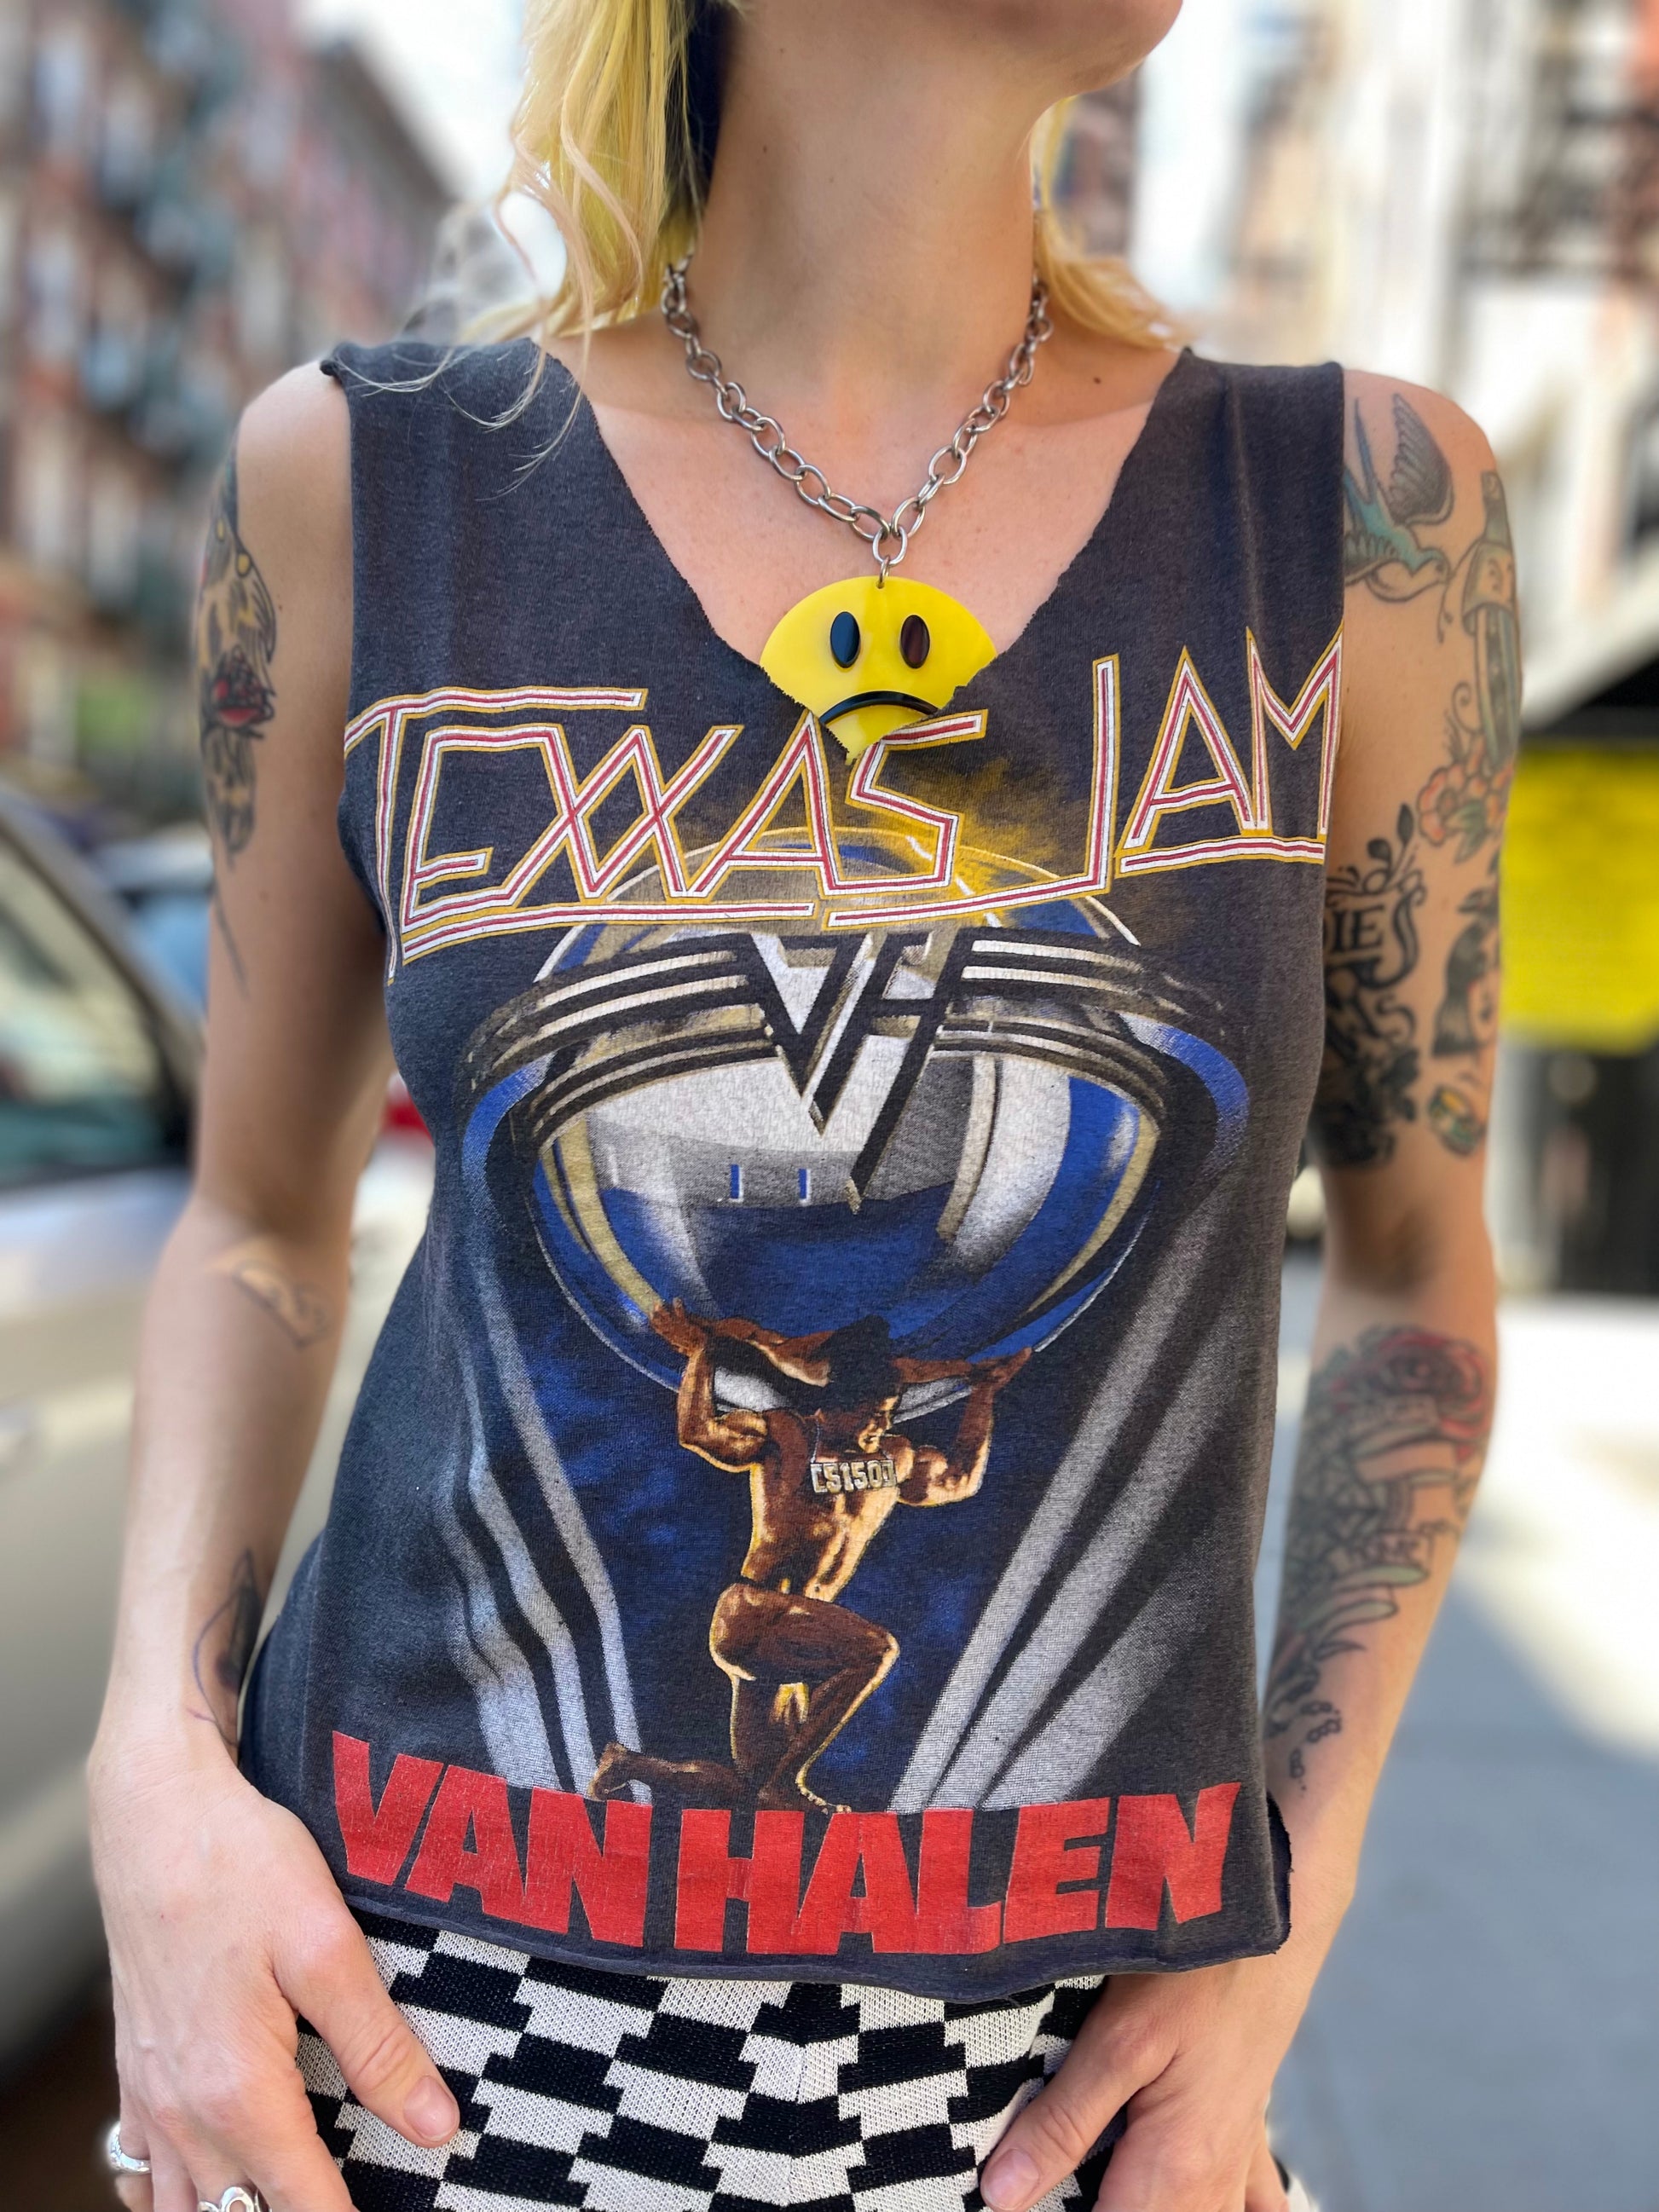 Vintage 1986 Van Halen T-shirt - Spark Pretty